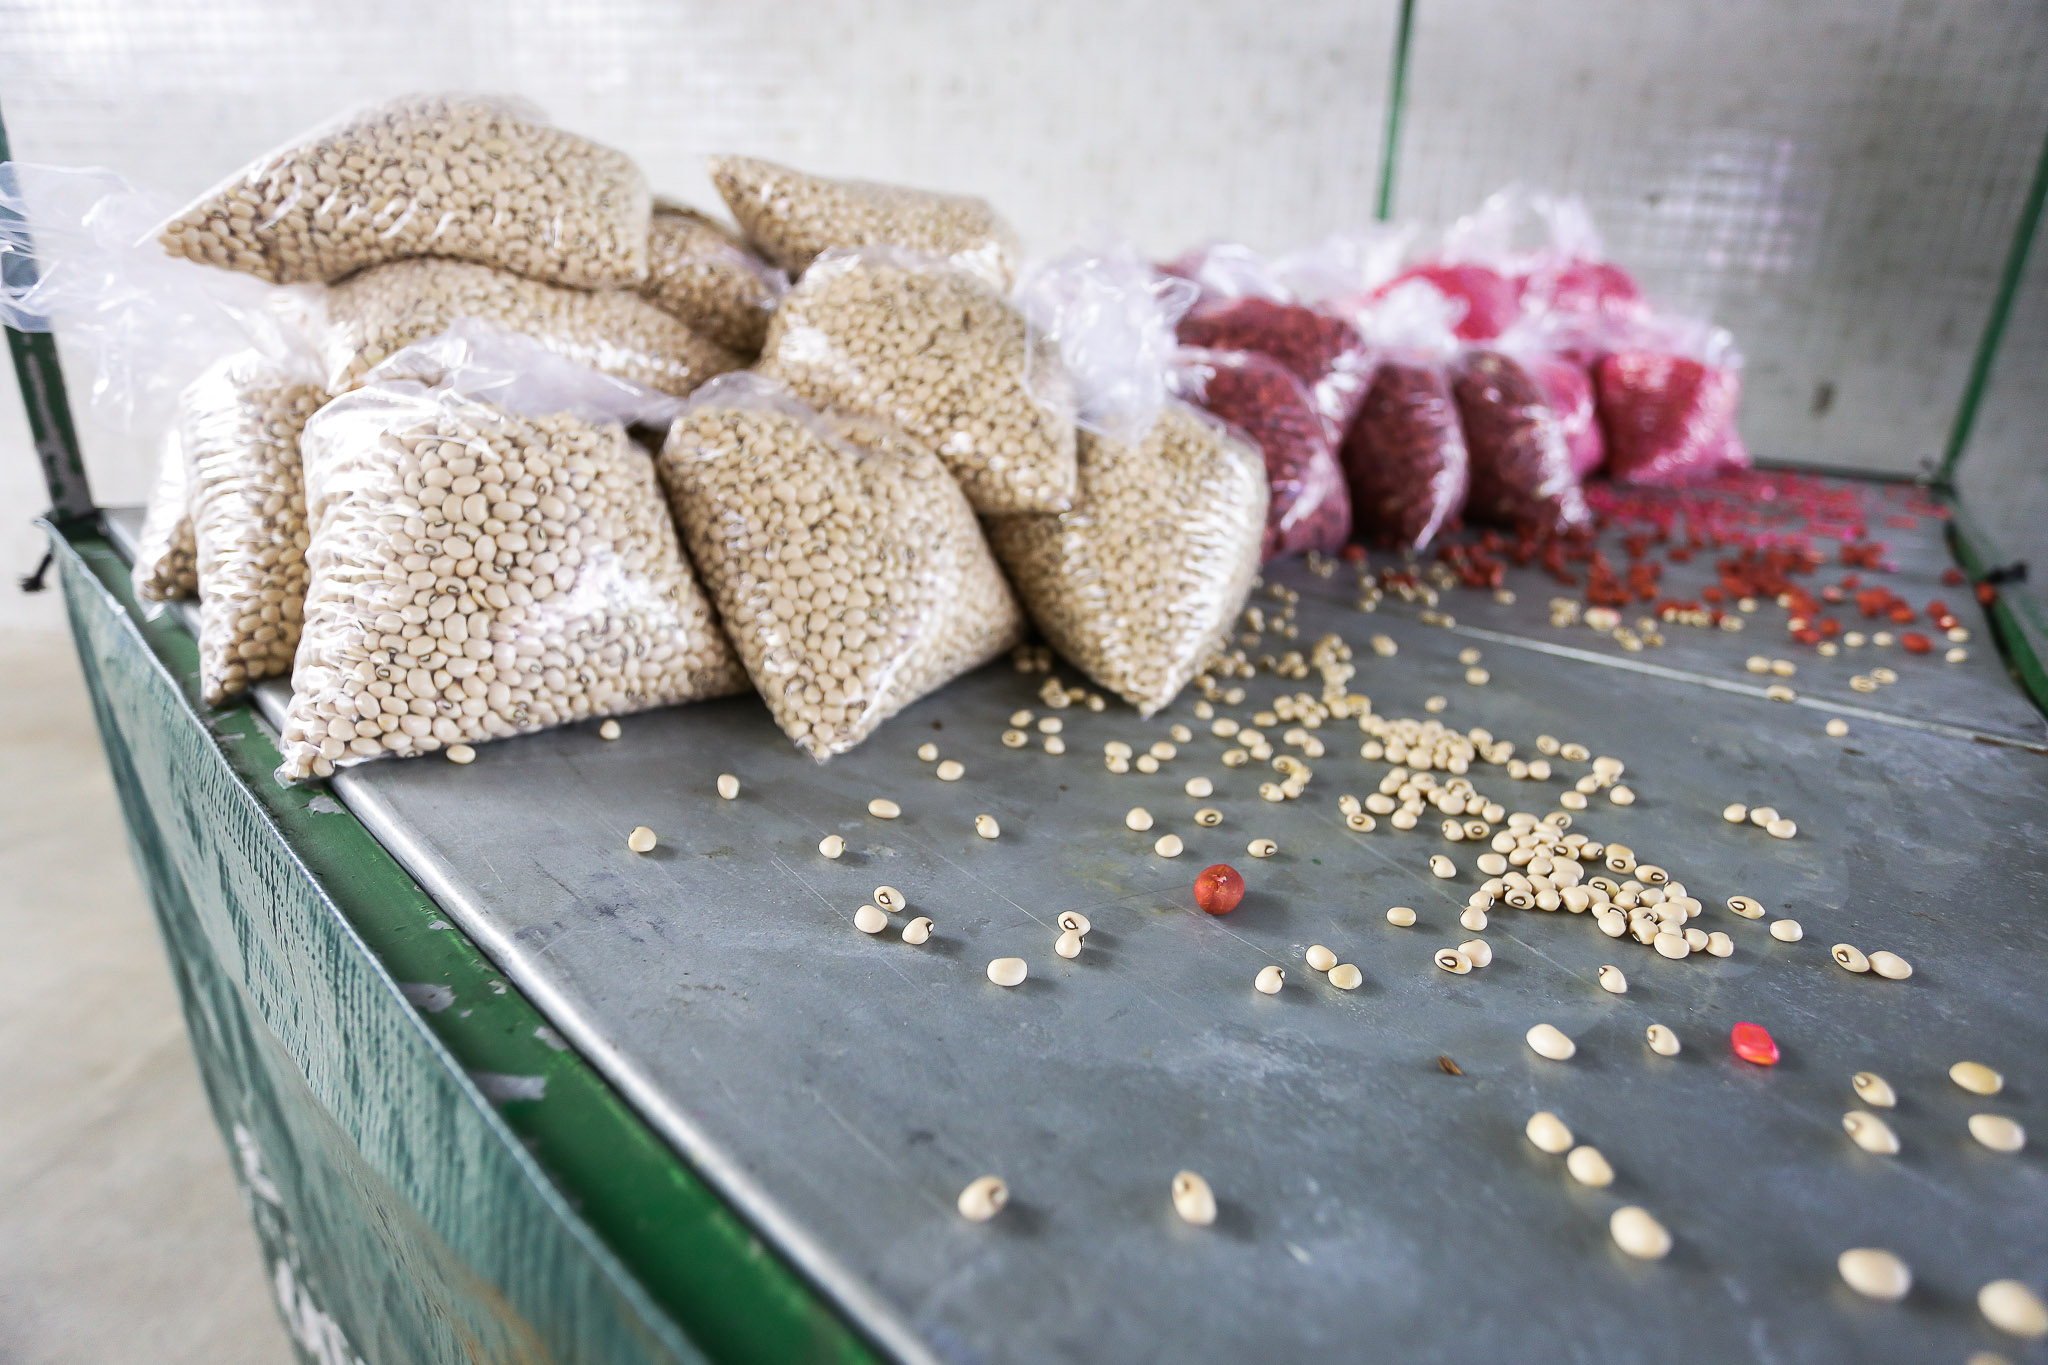 Prefeitura de Camaçari entrega 2.500 quilos de sementes para agricultores